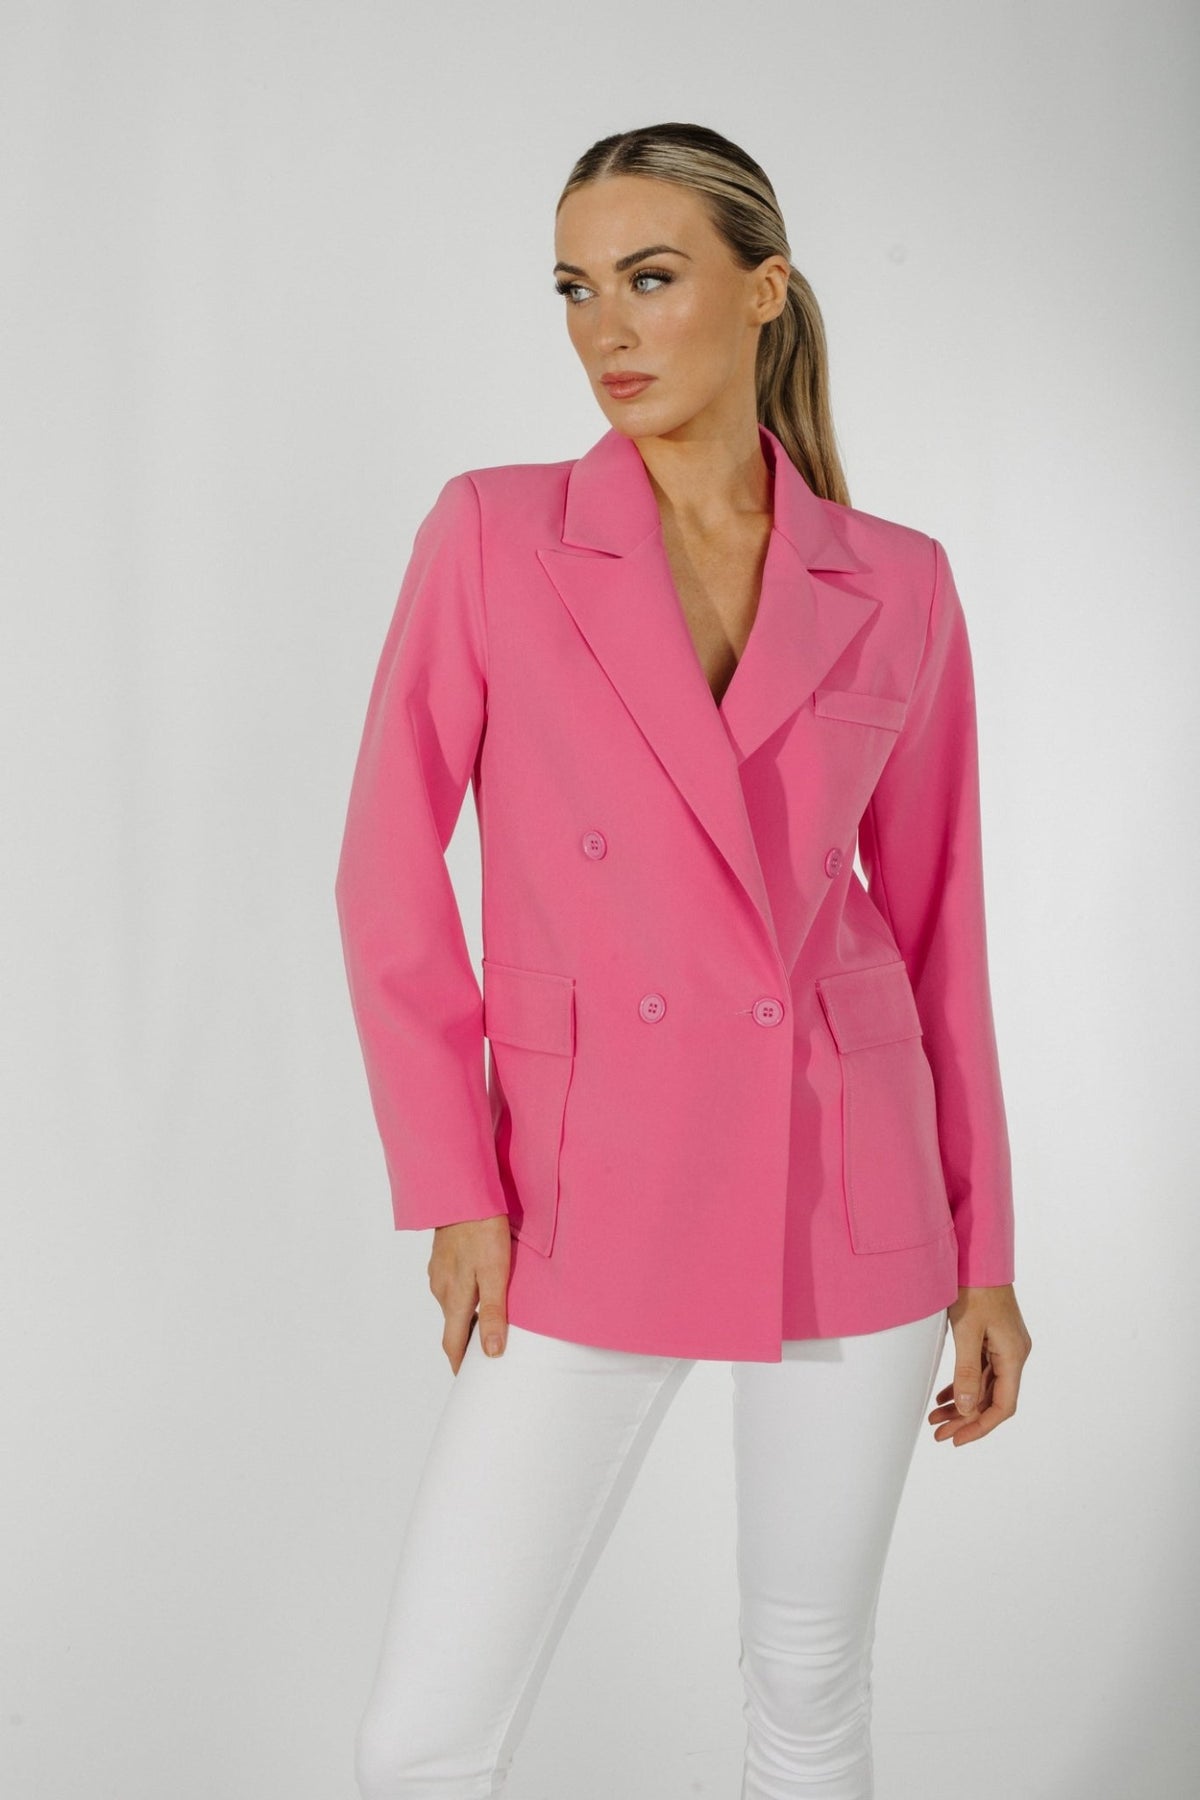 Lexi Blazer In Pink - The Walk in Wardrobe